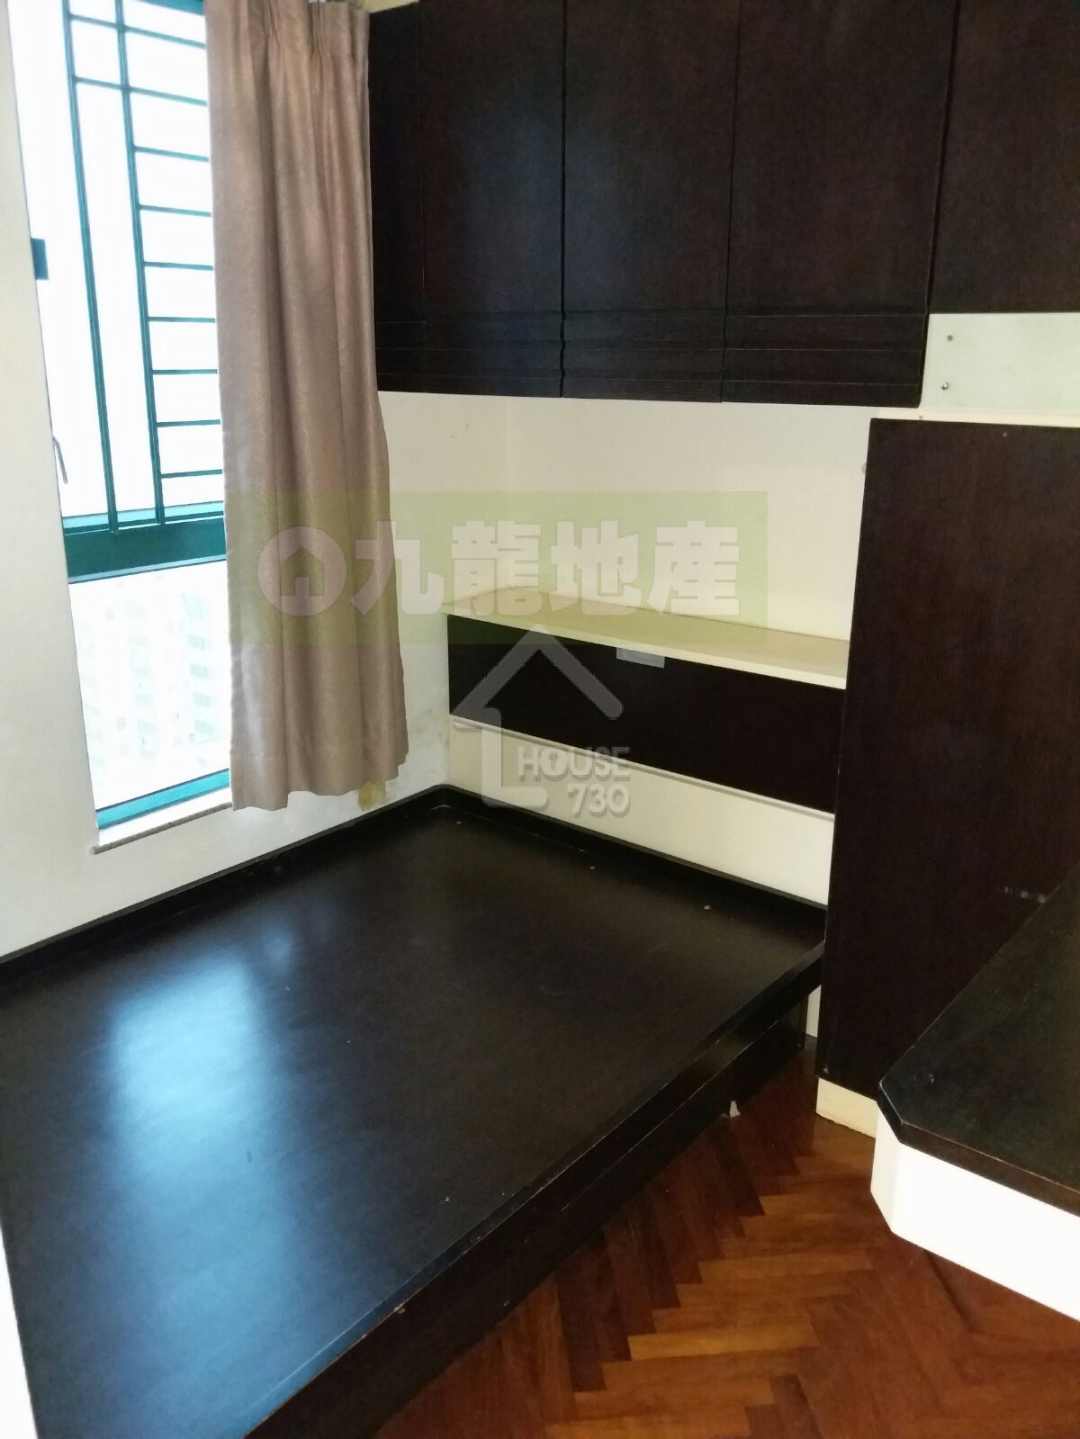 Sham Shui Po KENT PLACE Upper Floor Master Room House730-6580207